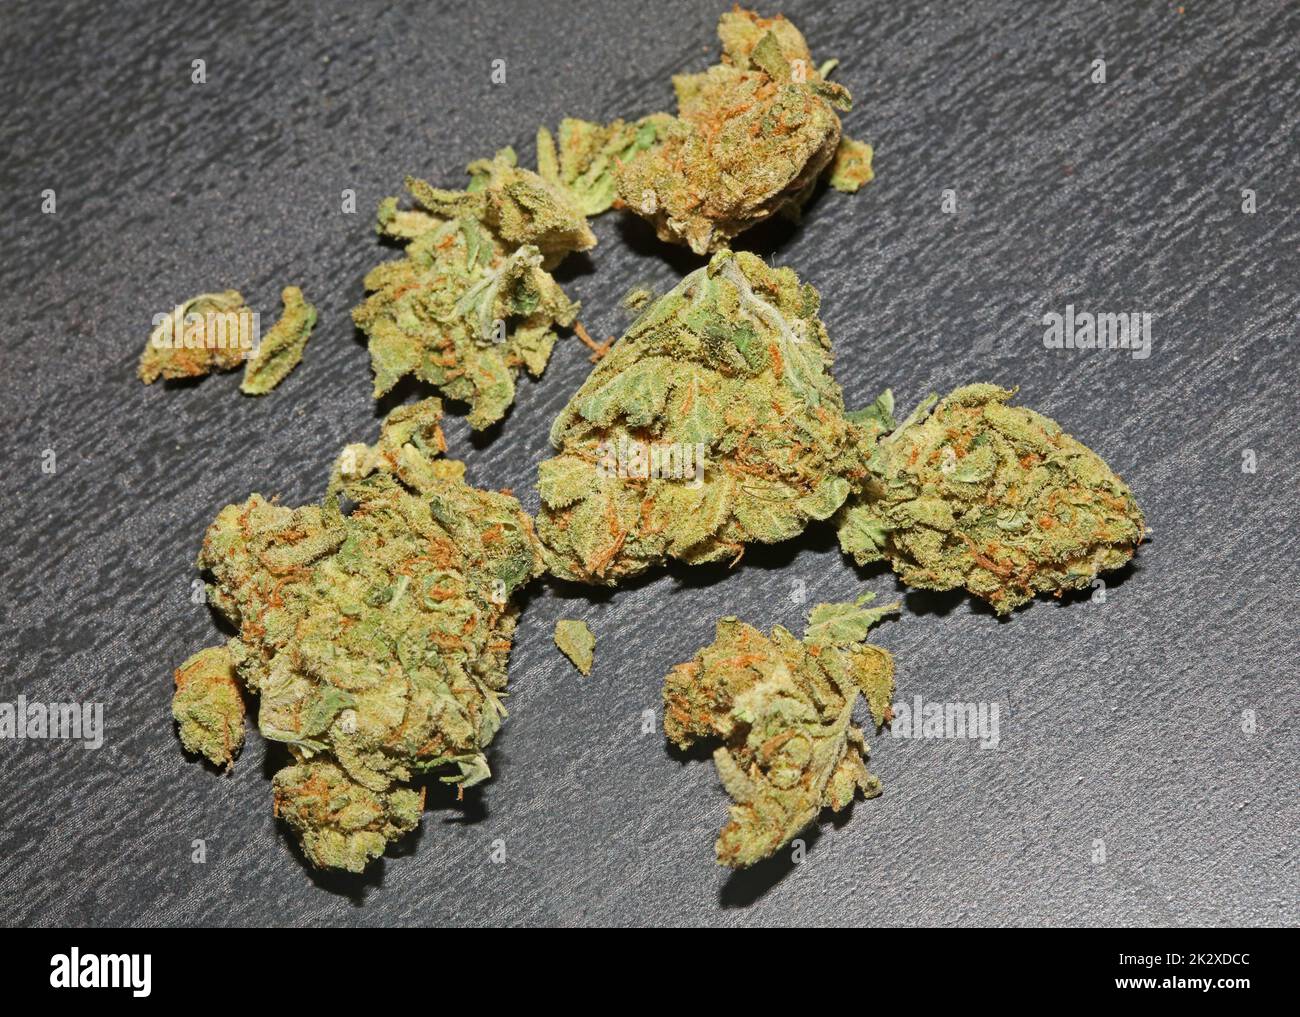 Marijuana buds and digital scale Stock Photo - Alamy